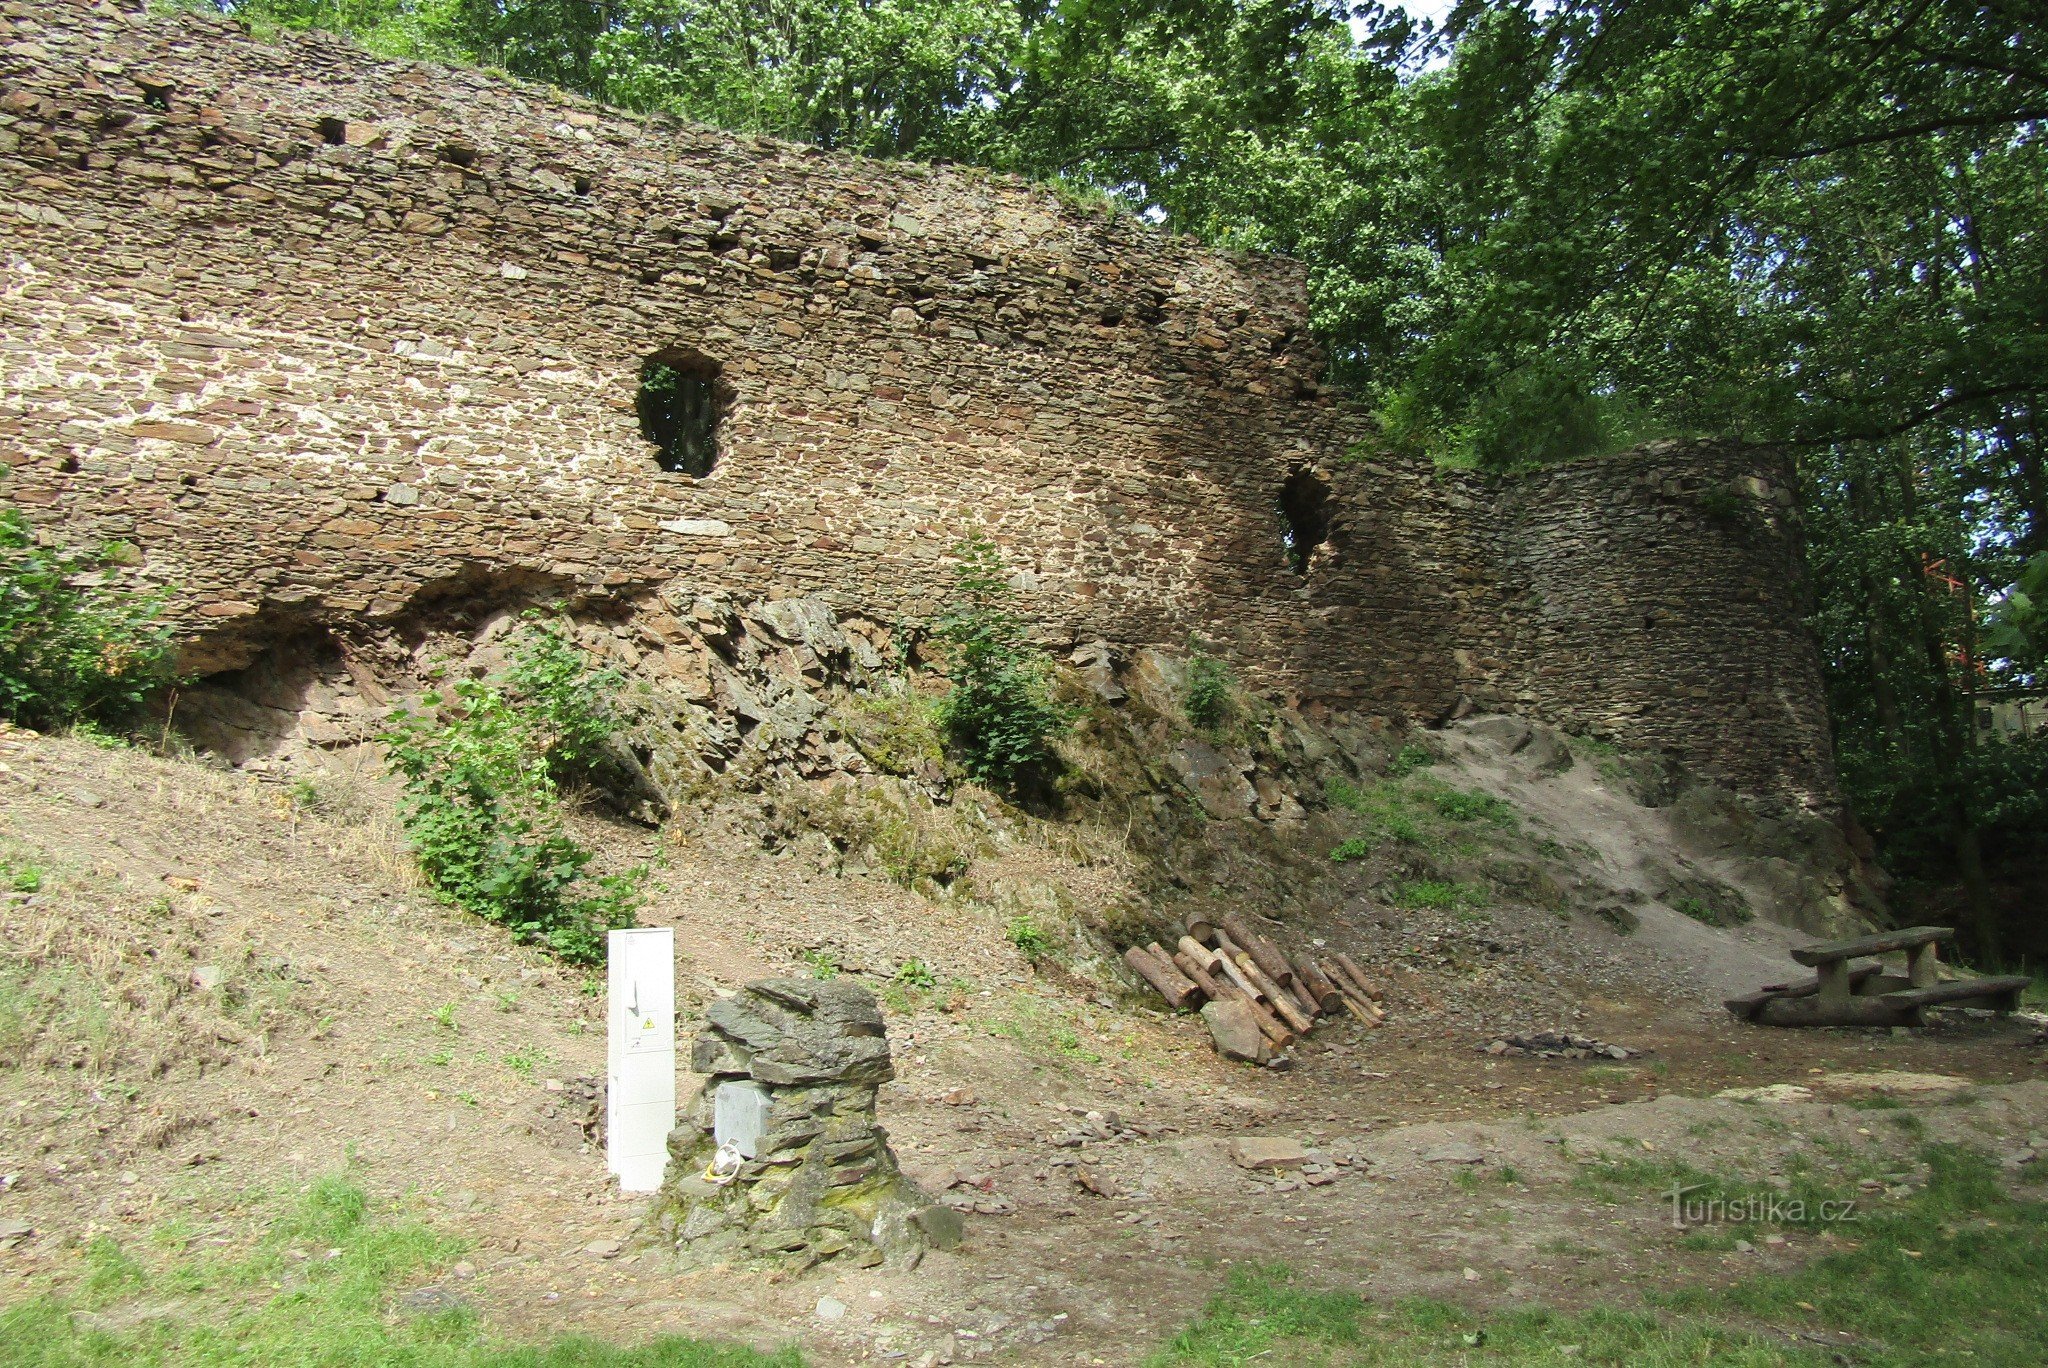 Замок Цимбурк, также называемый Трнавкой.